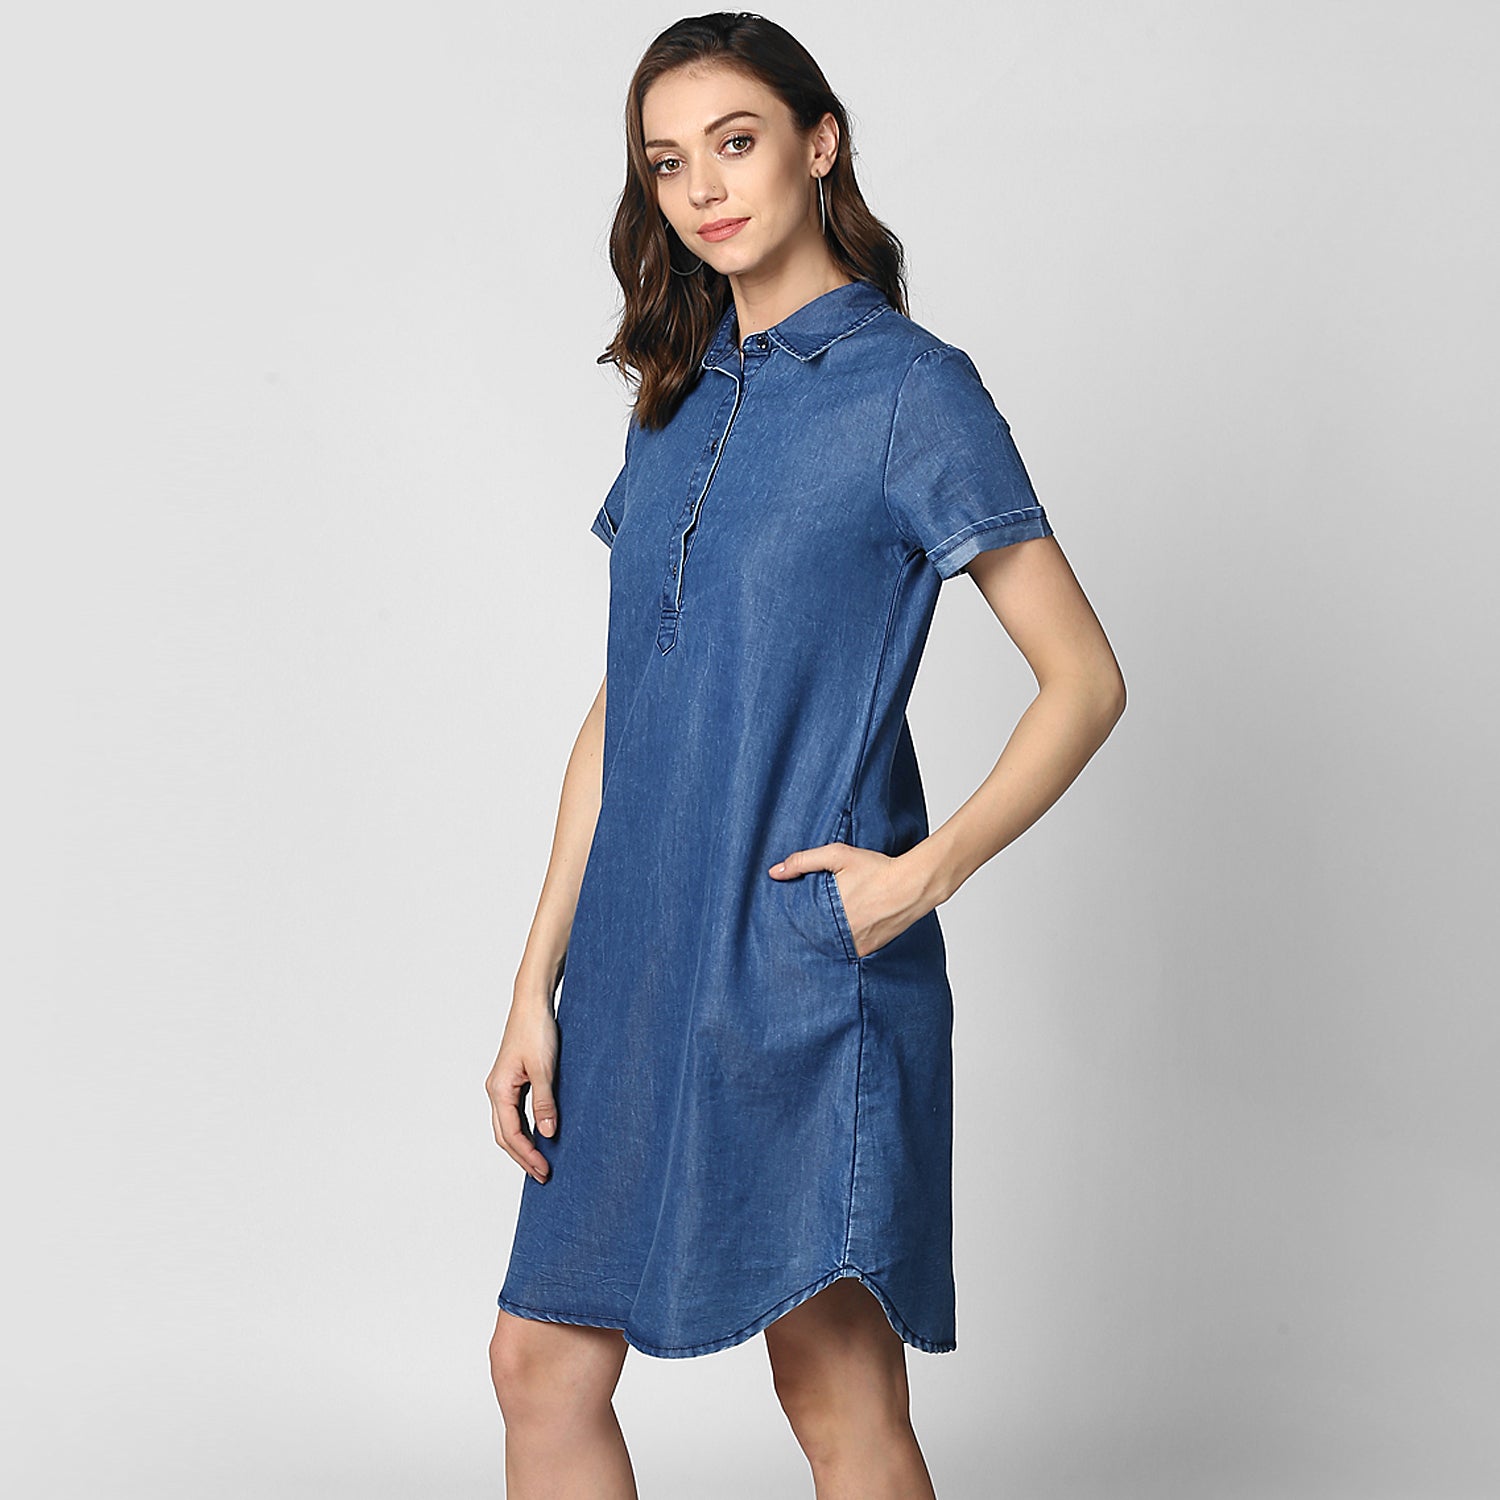 Women's Blue Denim Front Button Shirt Dress - StyleStone